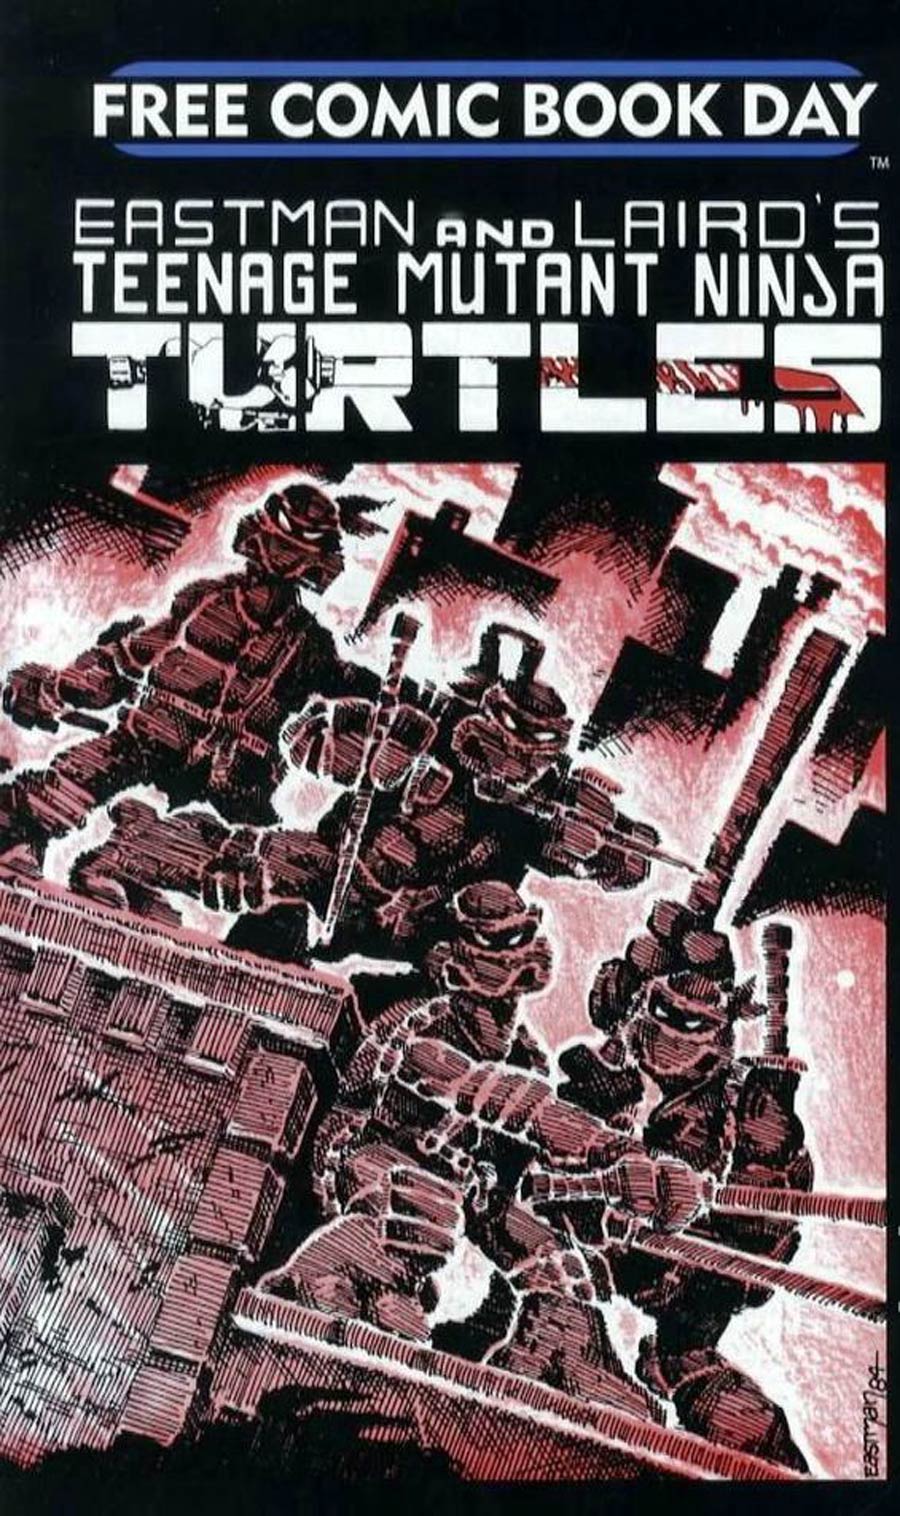 Teenage Mutant Ninja Turtles #1 Cover I FCBD 2009 Reprint